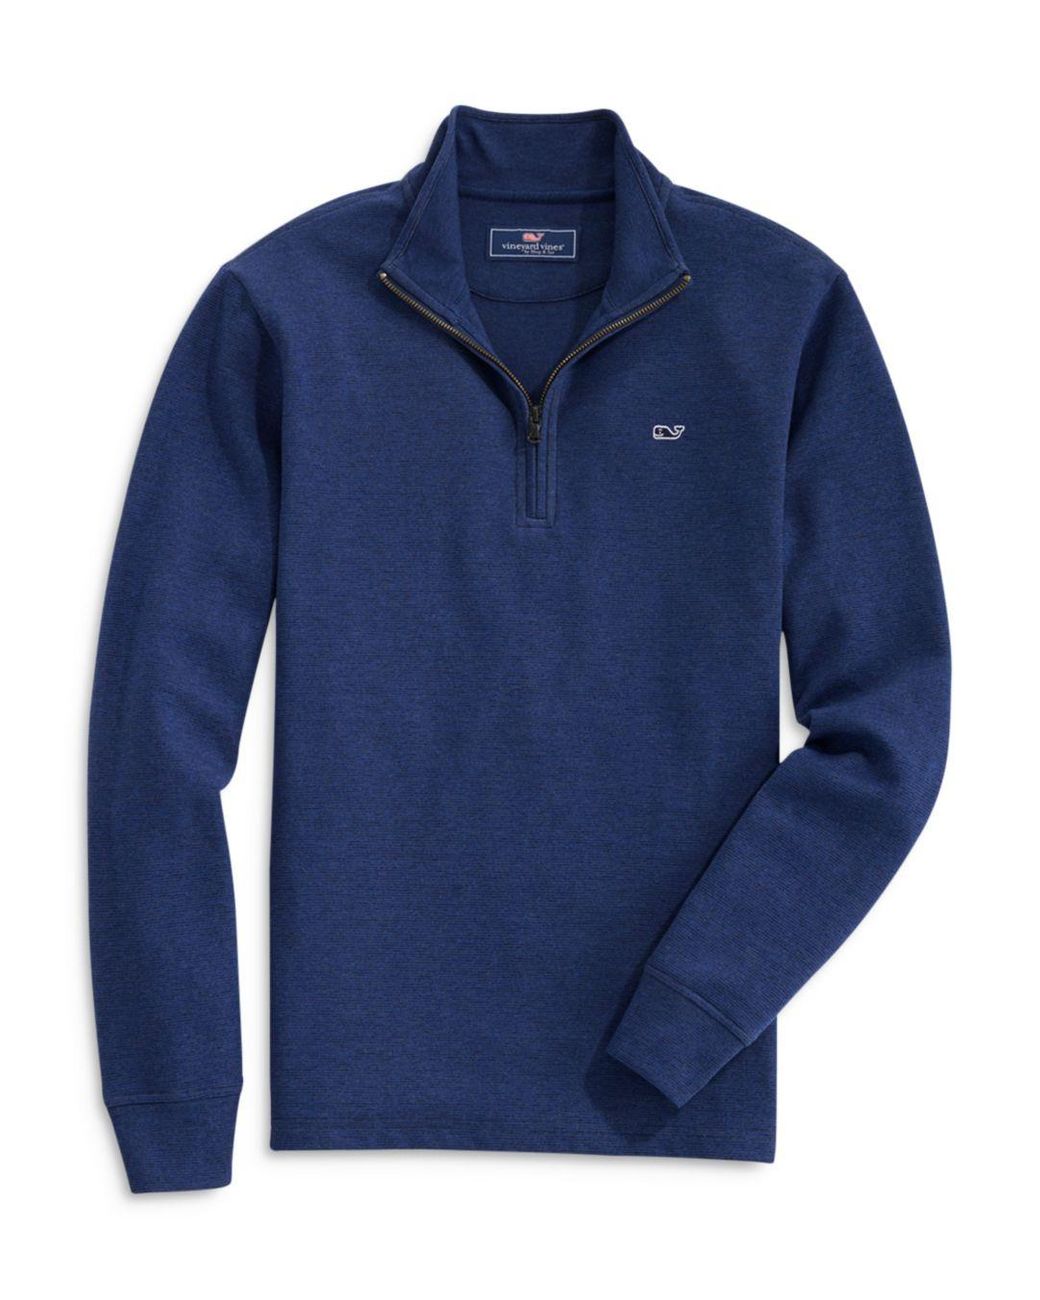 Vineyard Vines Cotton Saltwater Quarter Zip Sweater in Blue for Men - Lyst